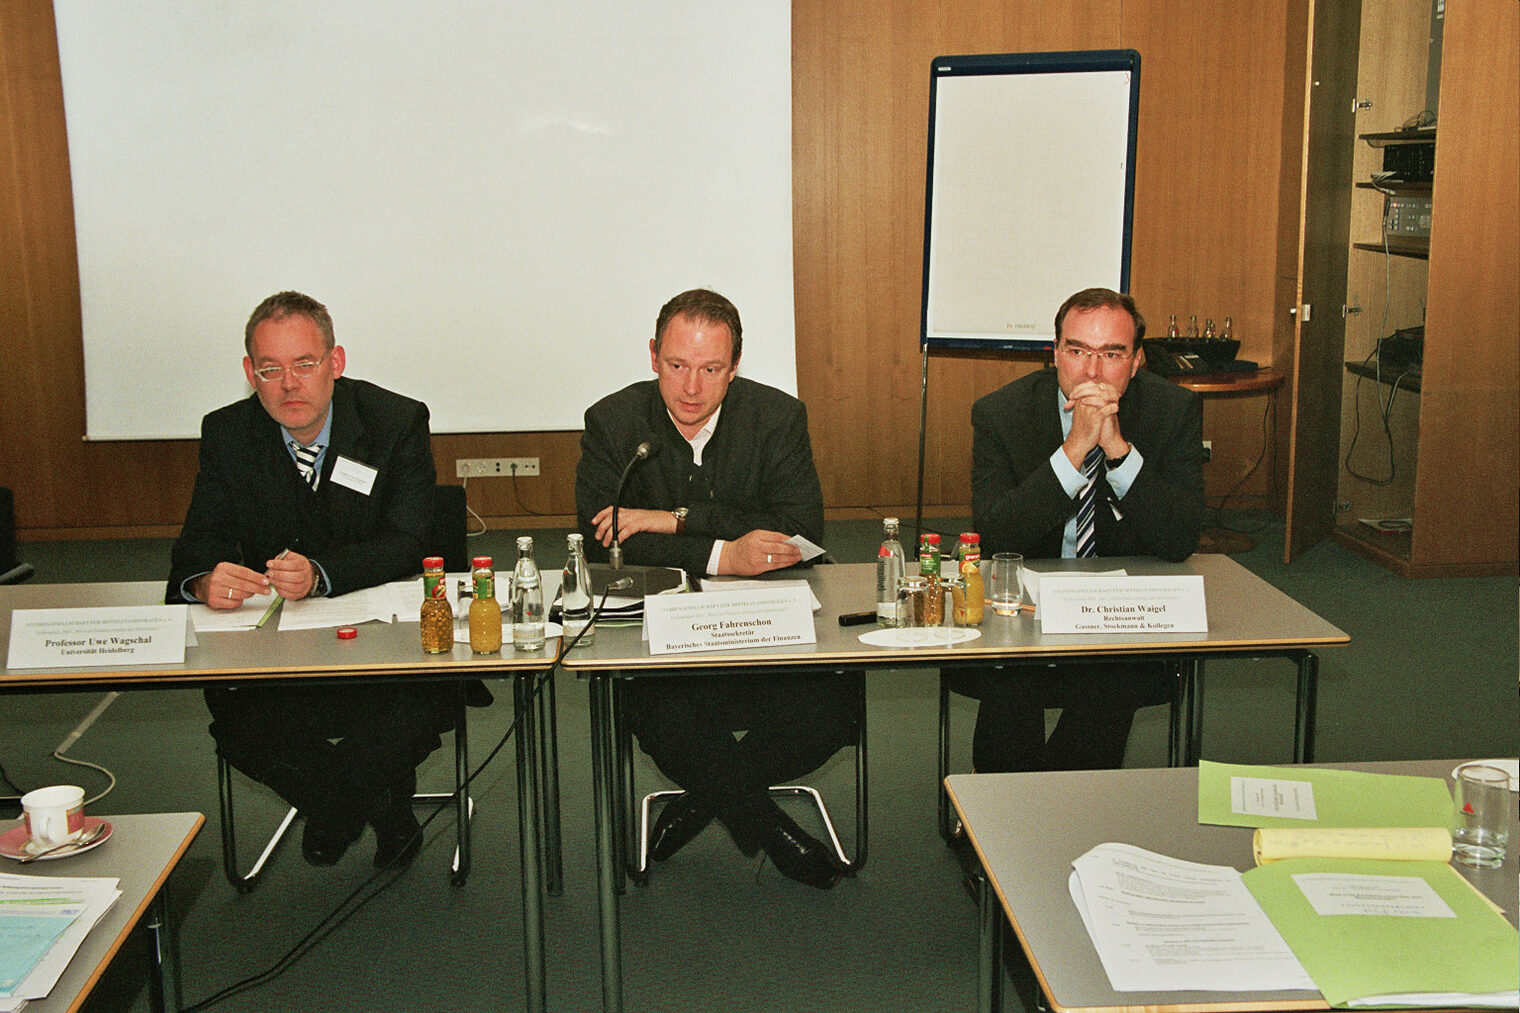 Georg Fahrenschon, Christian Waigel, Prof. Uwe Wagschal.